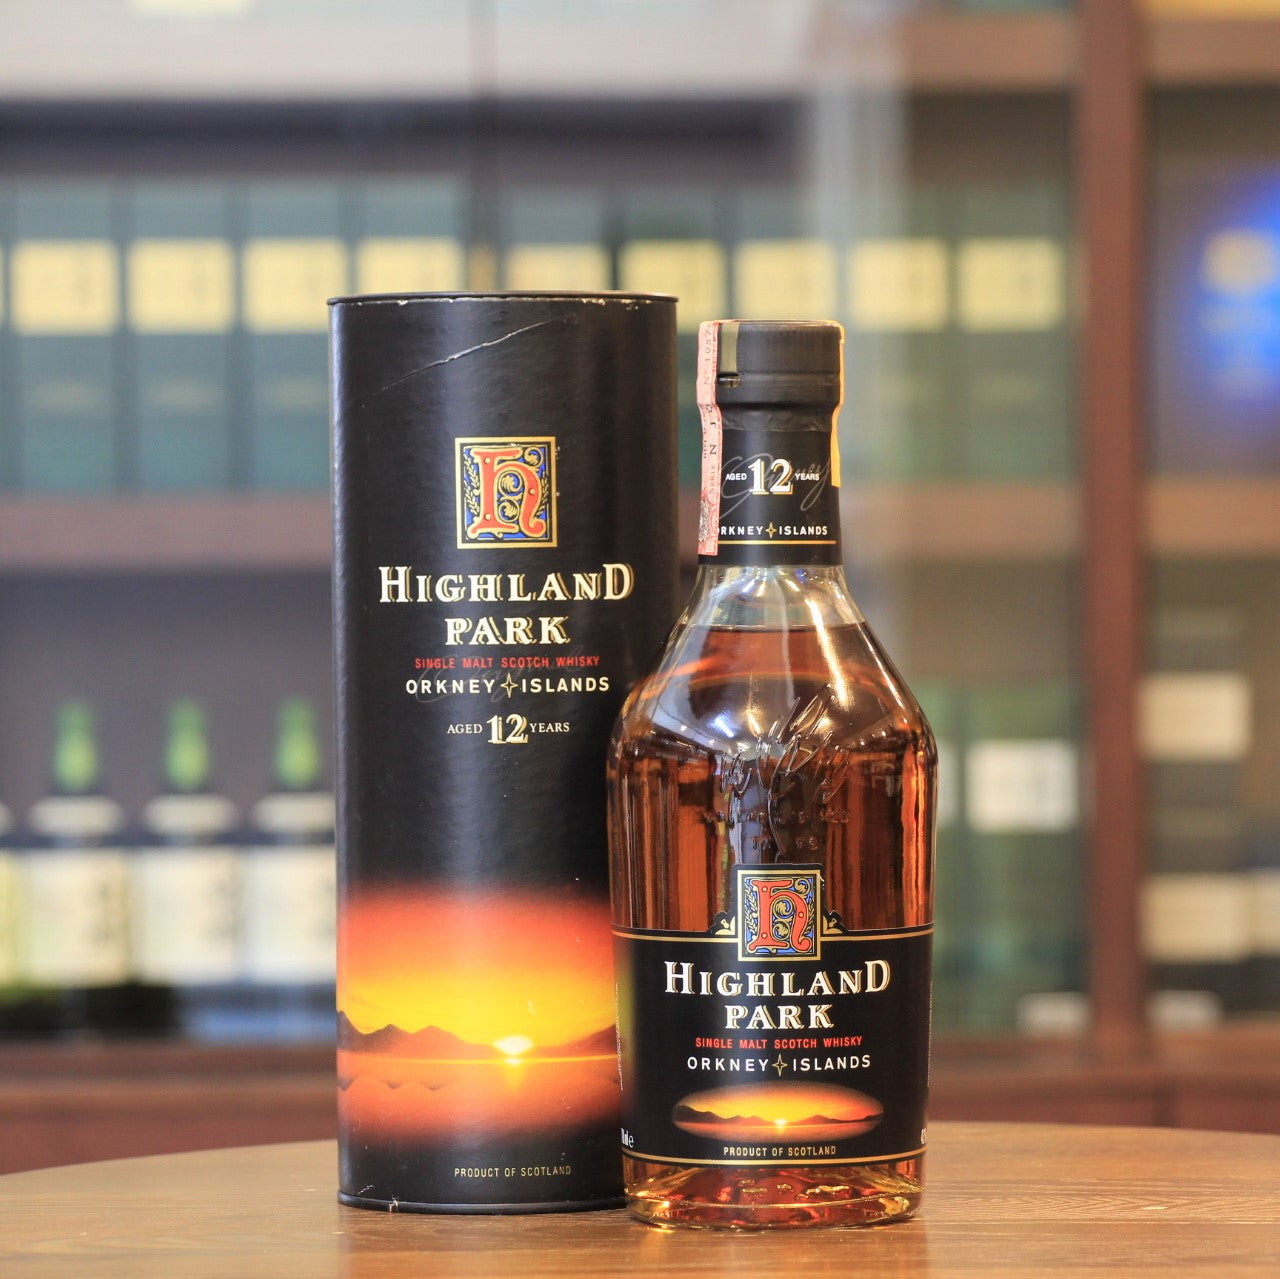 Highland Park 25 Years Old Single Malt Scotch Whisky (1990s Dumpy Bott